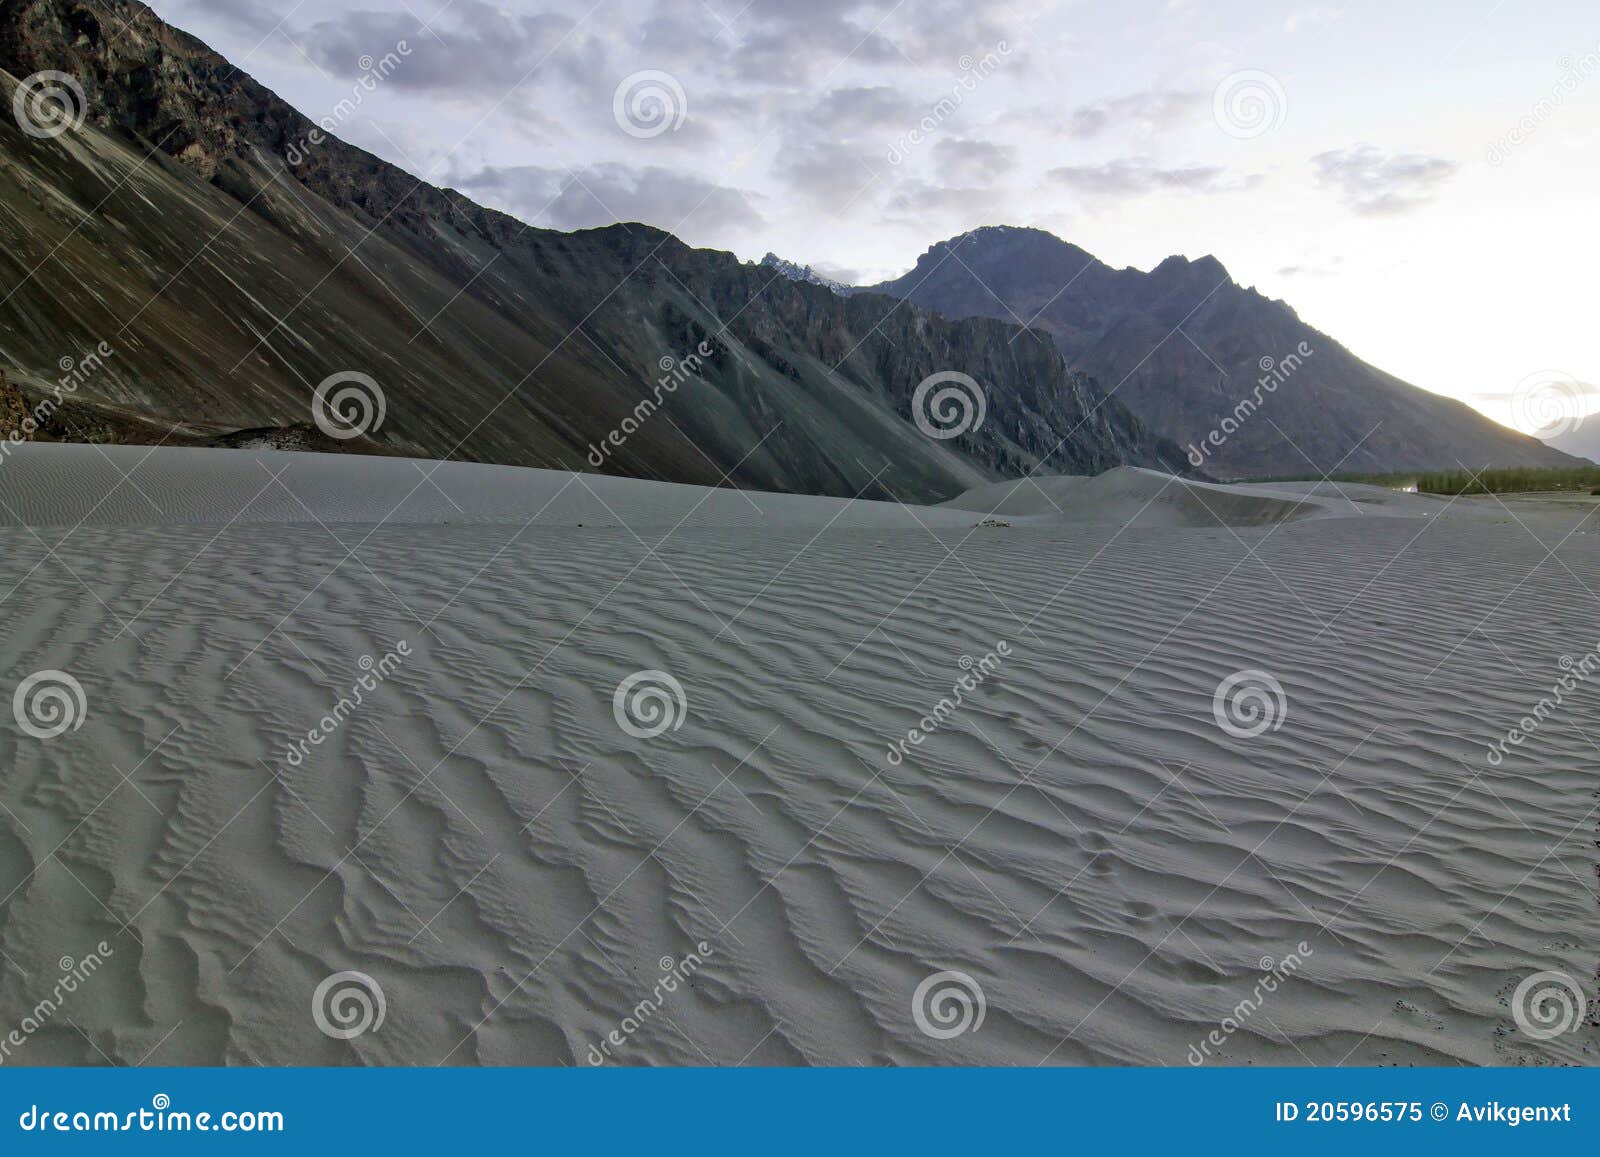 sand dunes in nubra valley, india